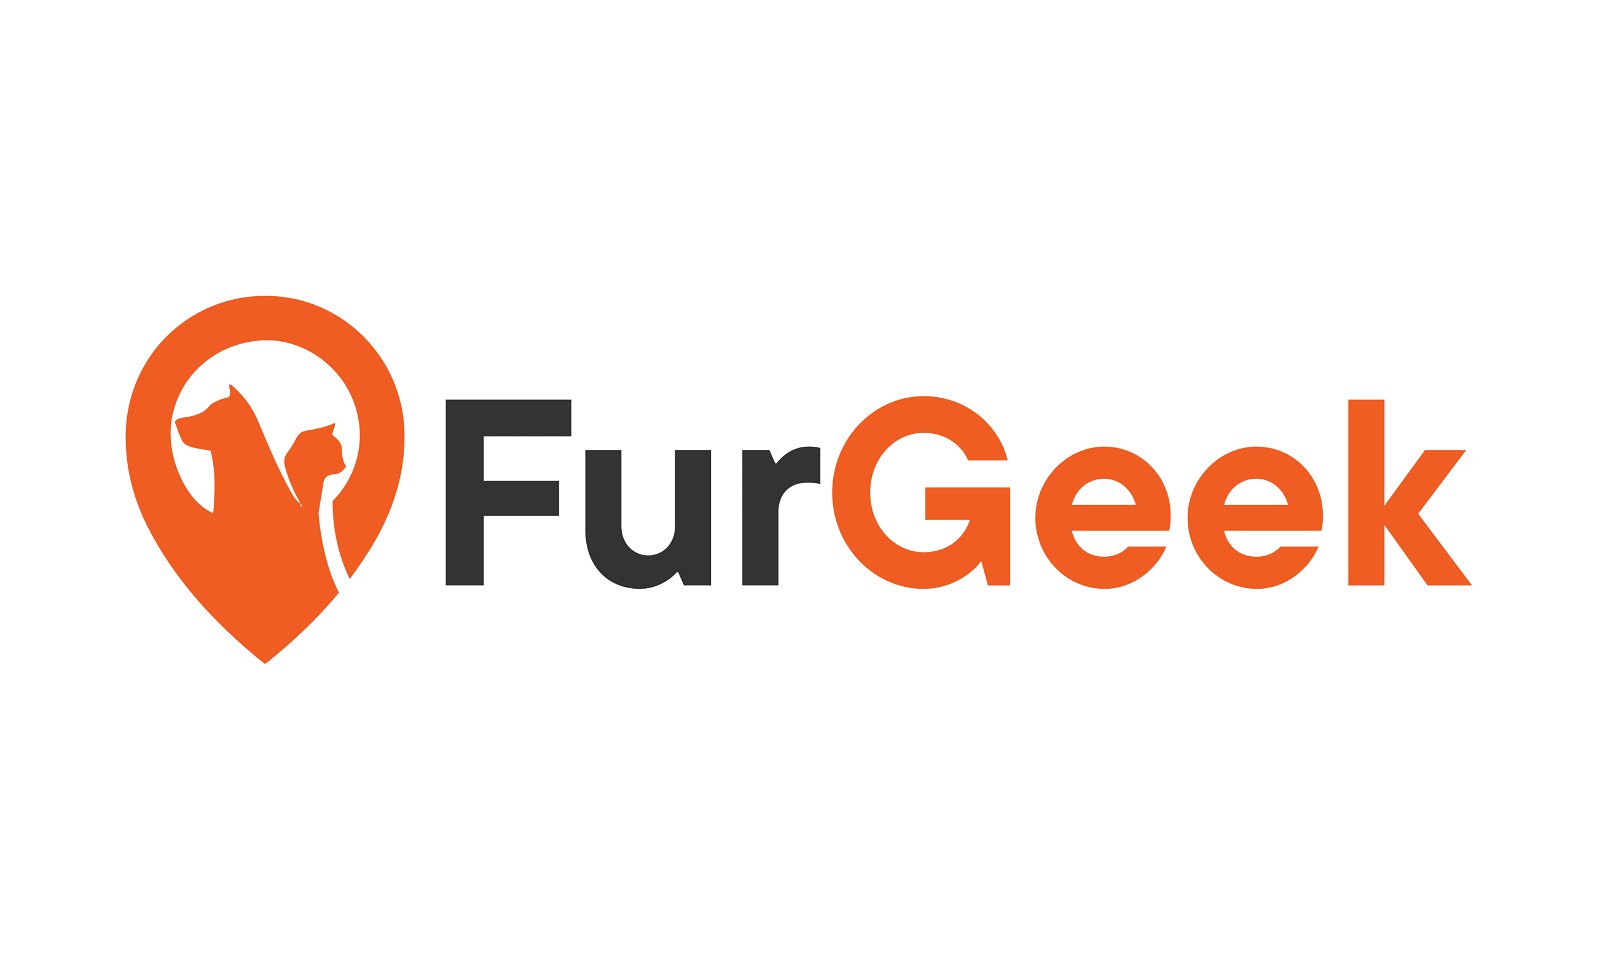 FurGeek.com - Creative brandable domain for sale